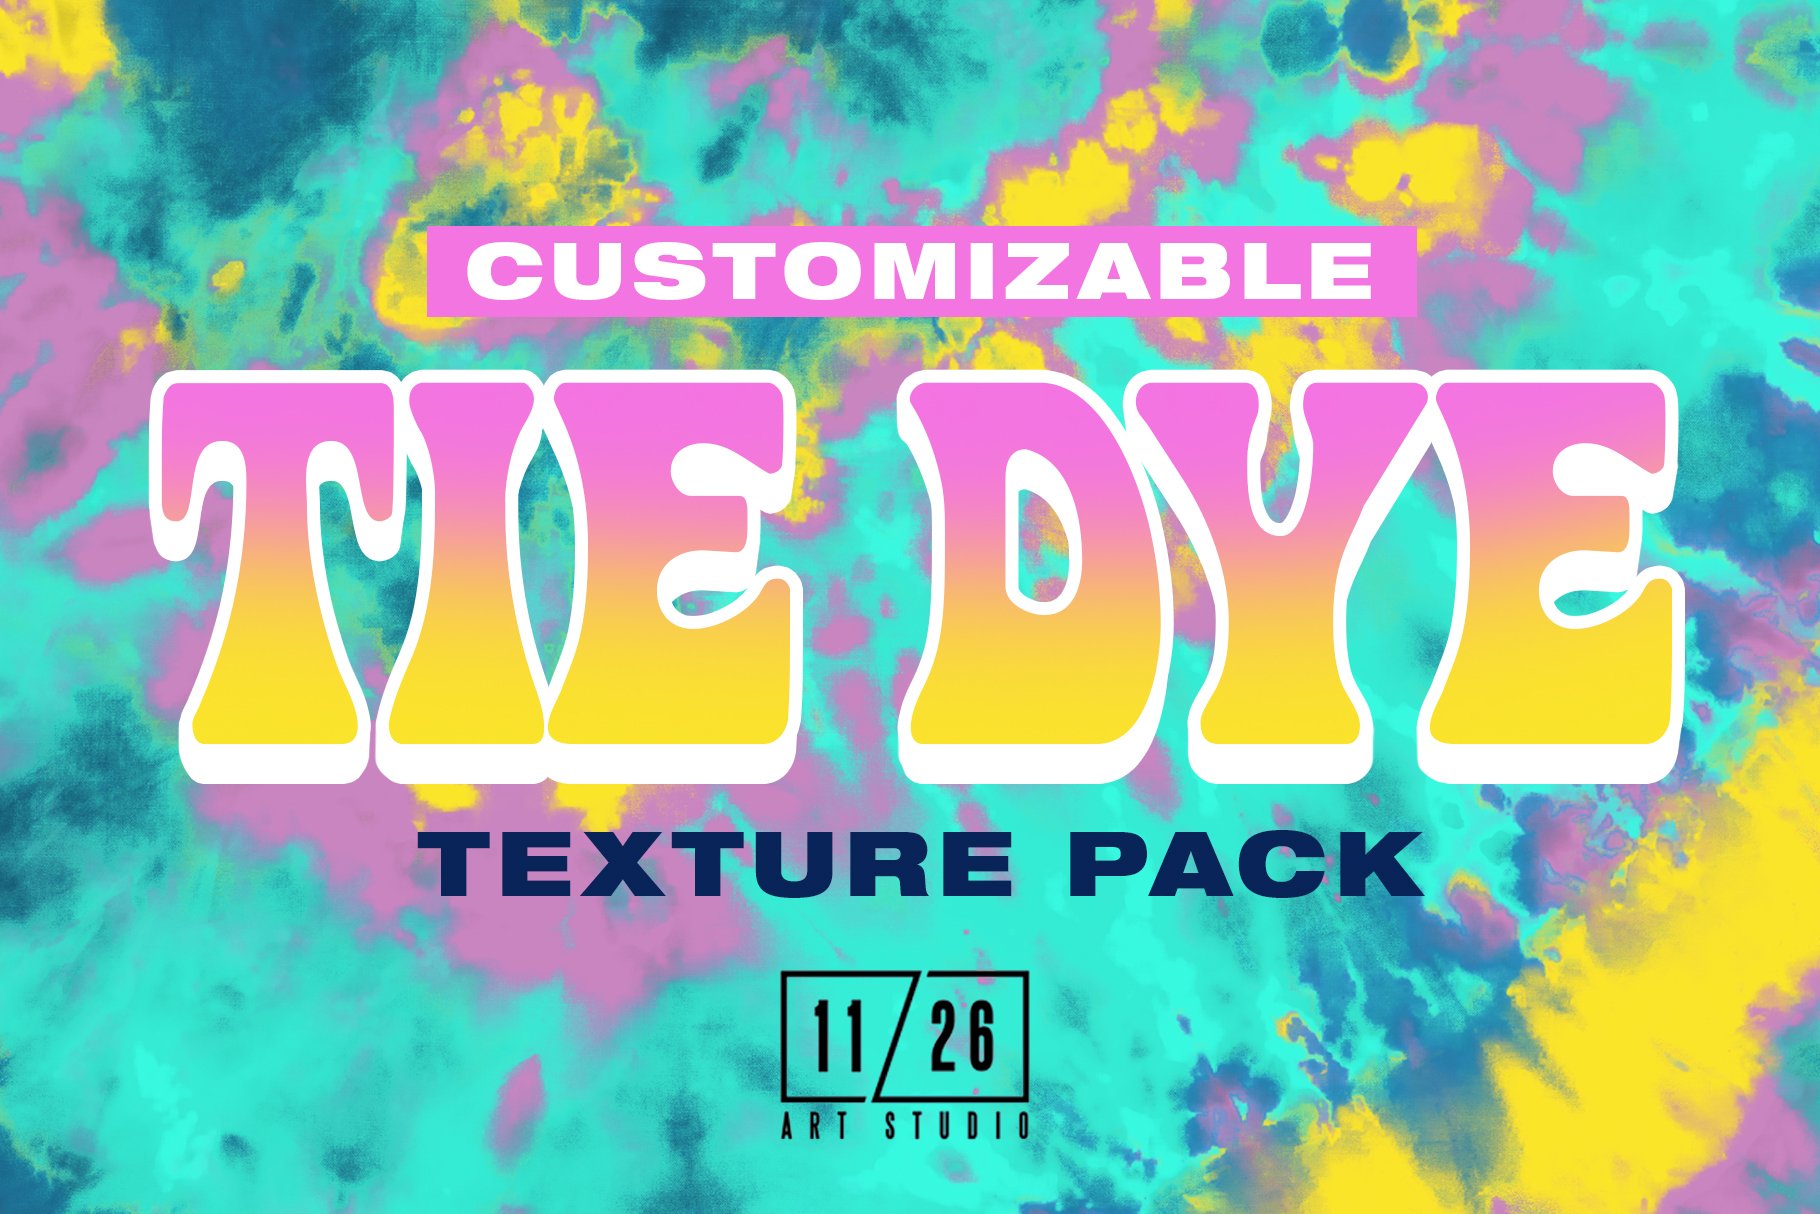 11/26 Tie Dye Pack - Vol. 1 cover image.